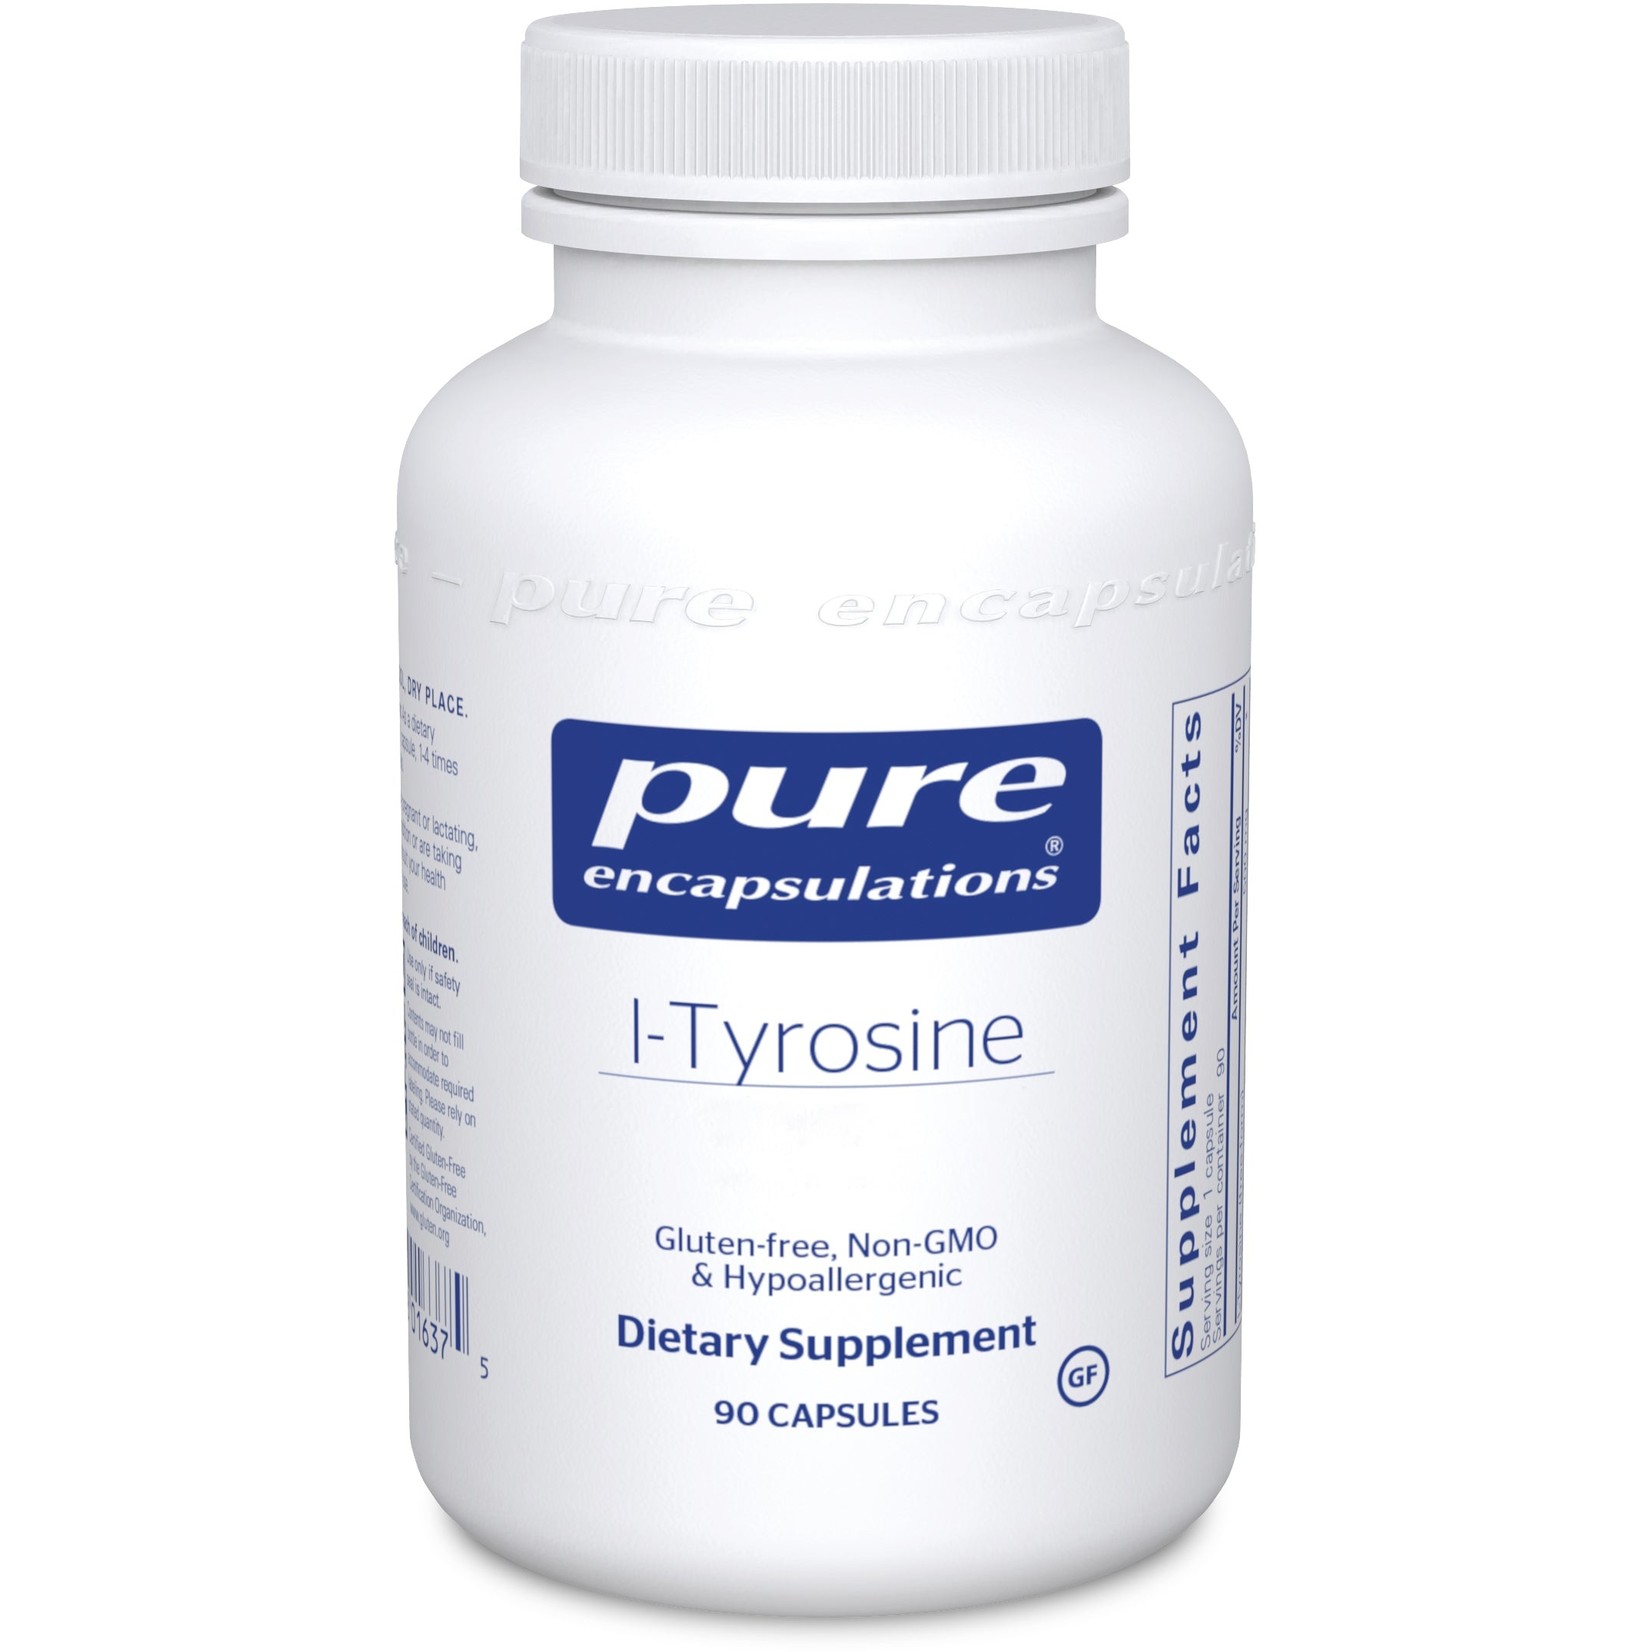 Pure Encapsulations Pure Encapsulations - L-Tyrosine - 90 Capsules